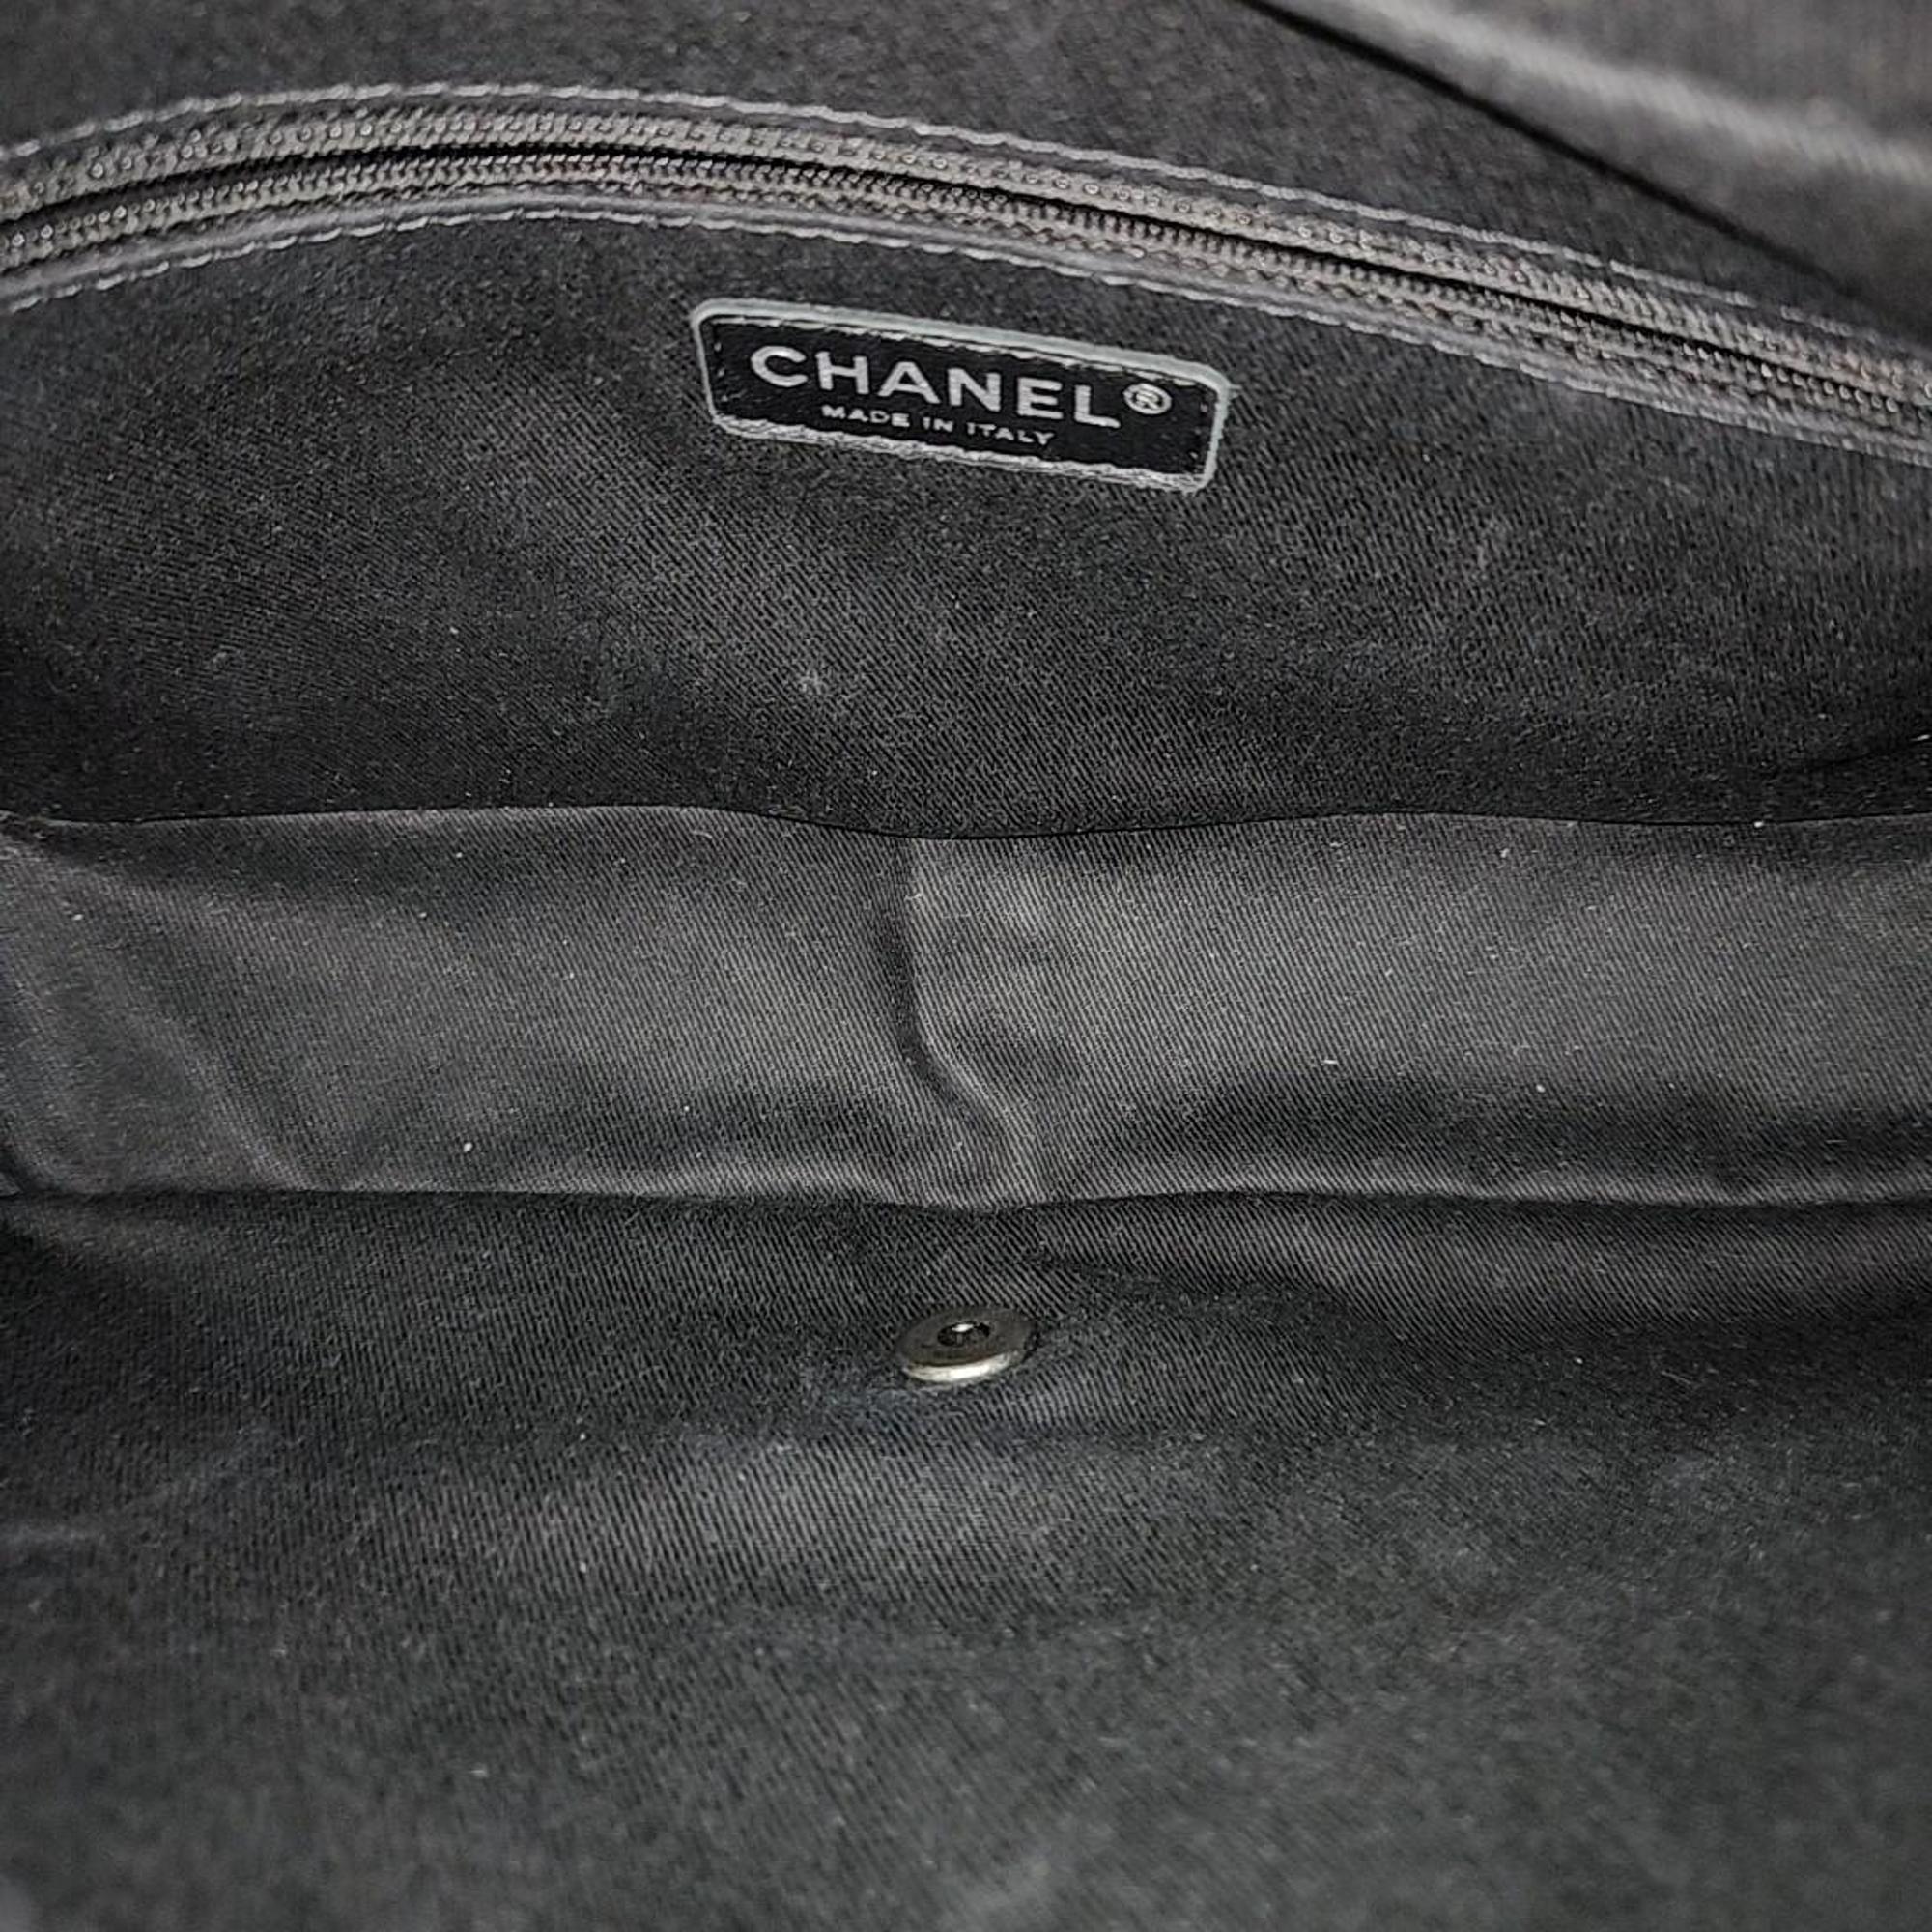 Chanel Paris-Bombay Shiva Flap Bag